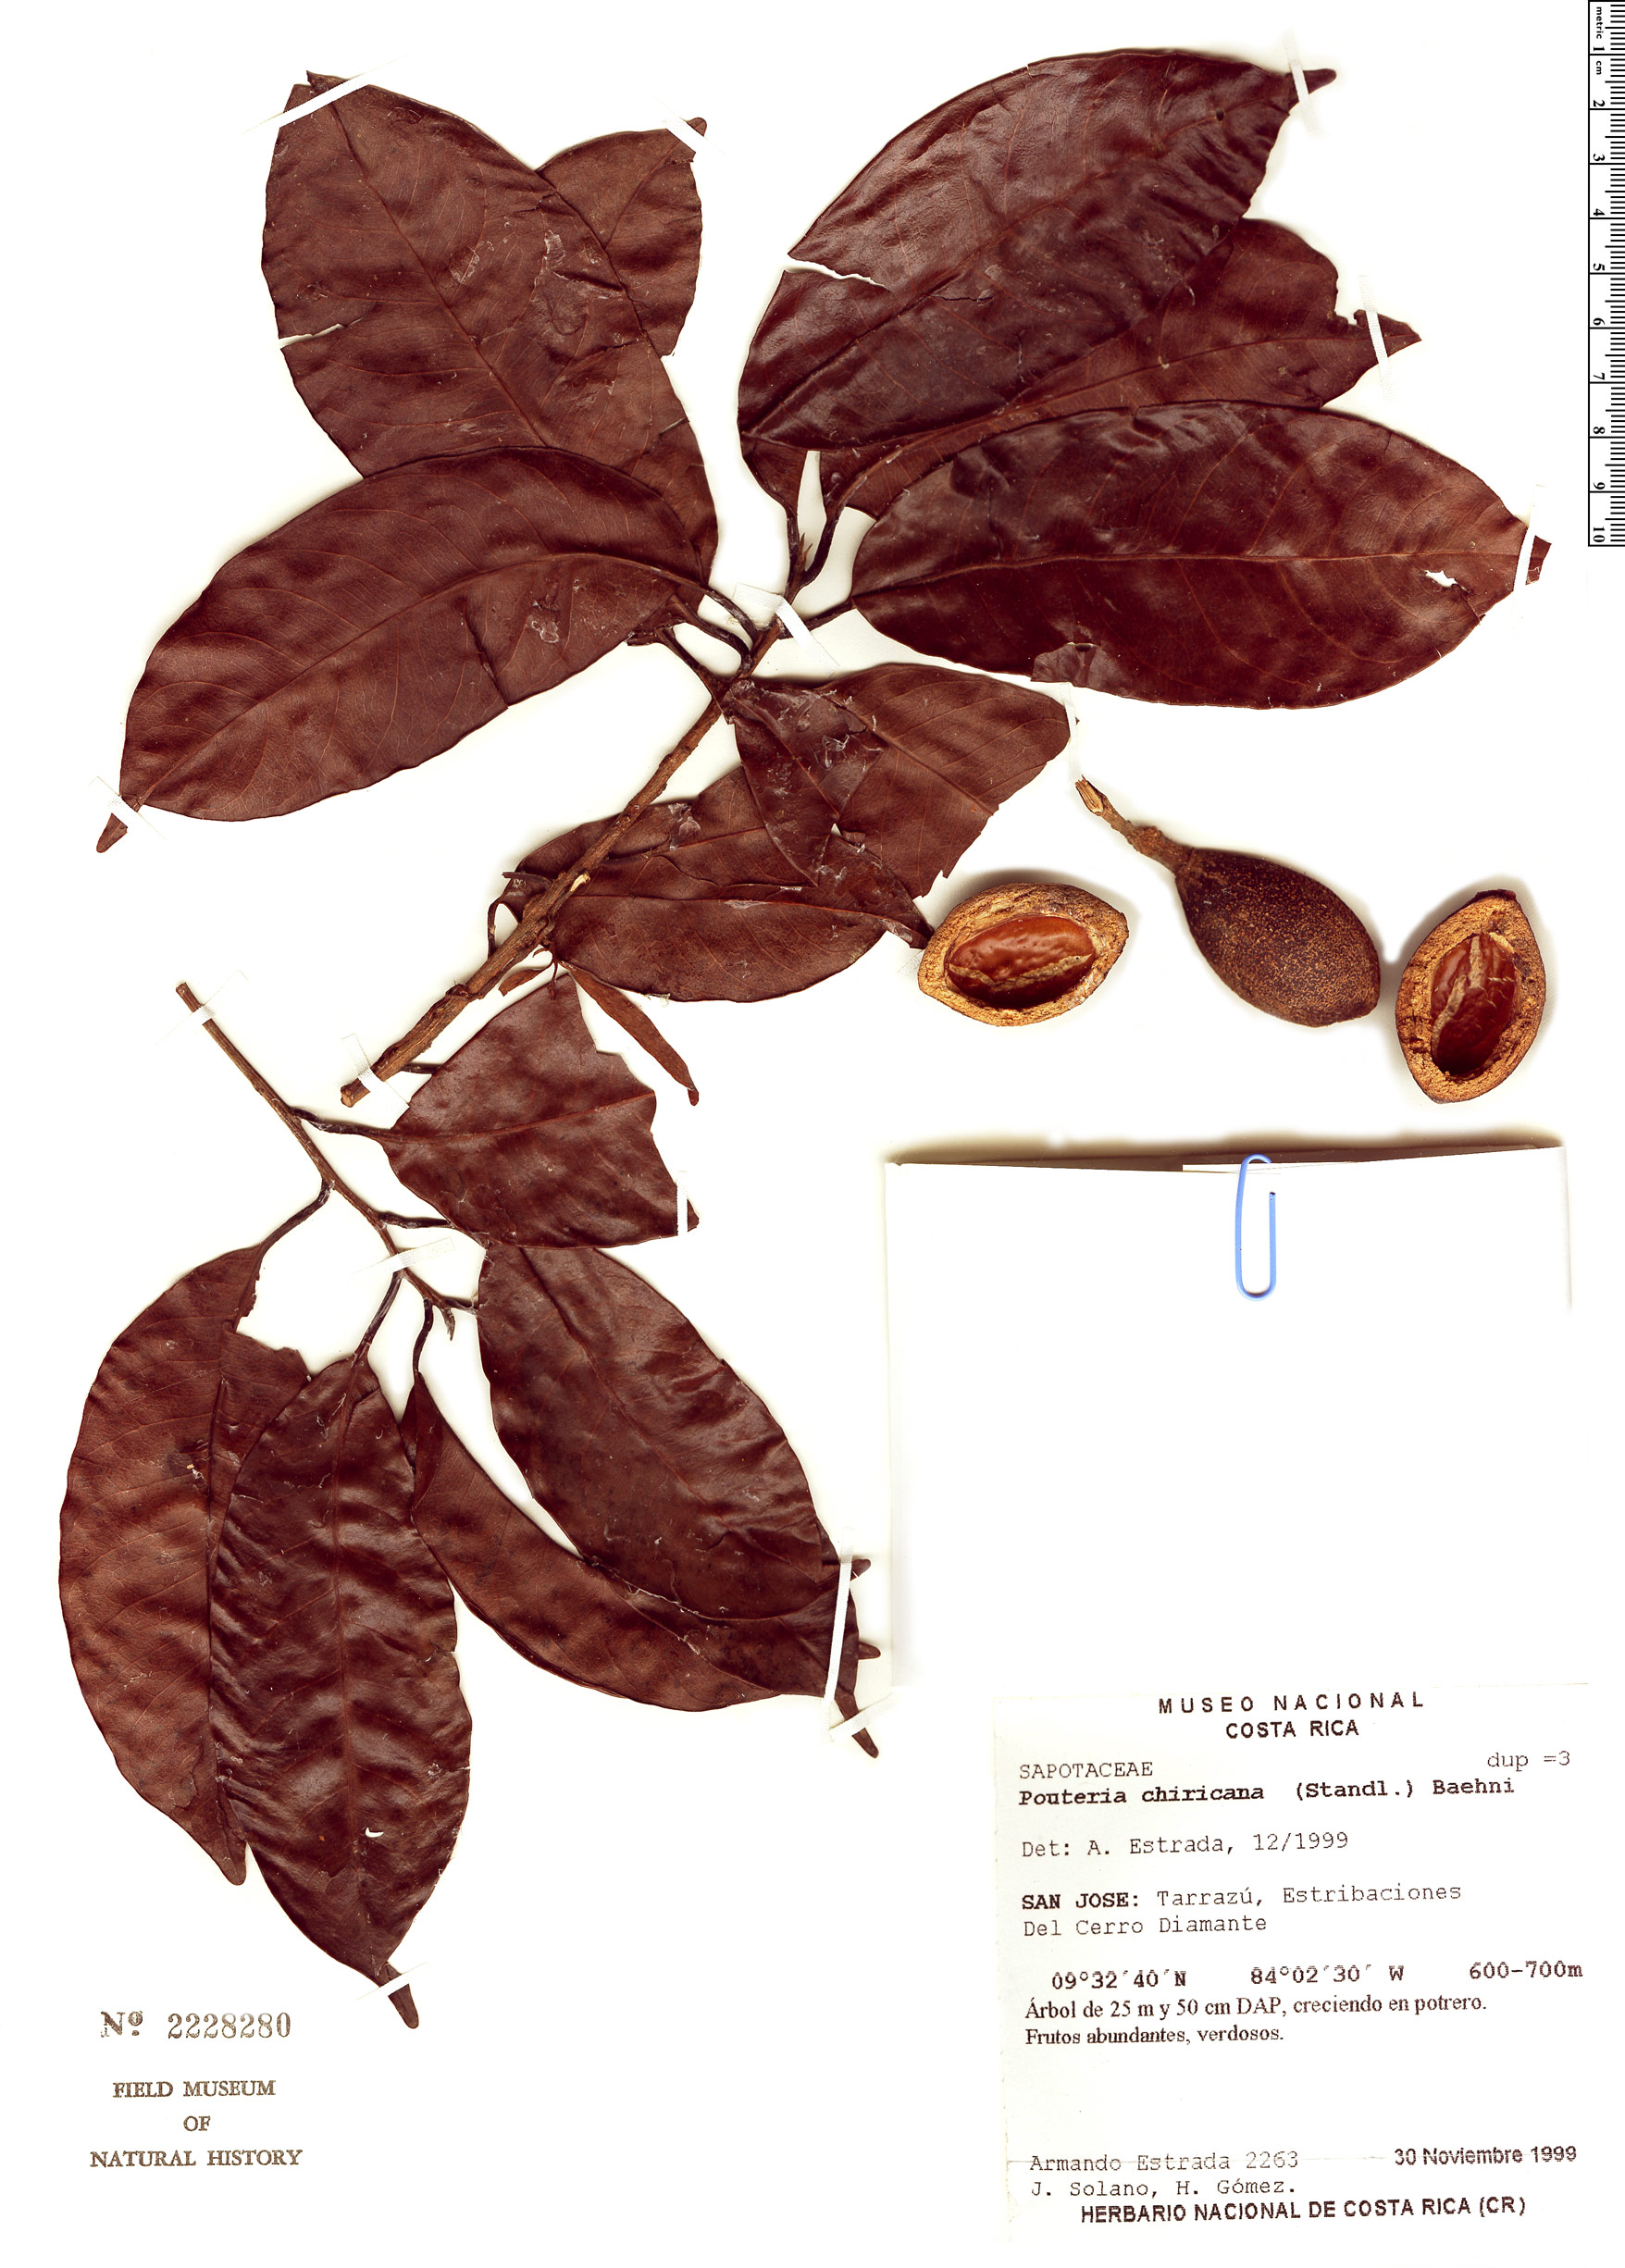 Pouteria chiricana image